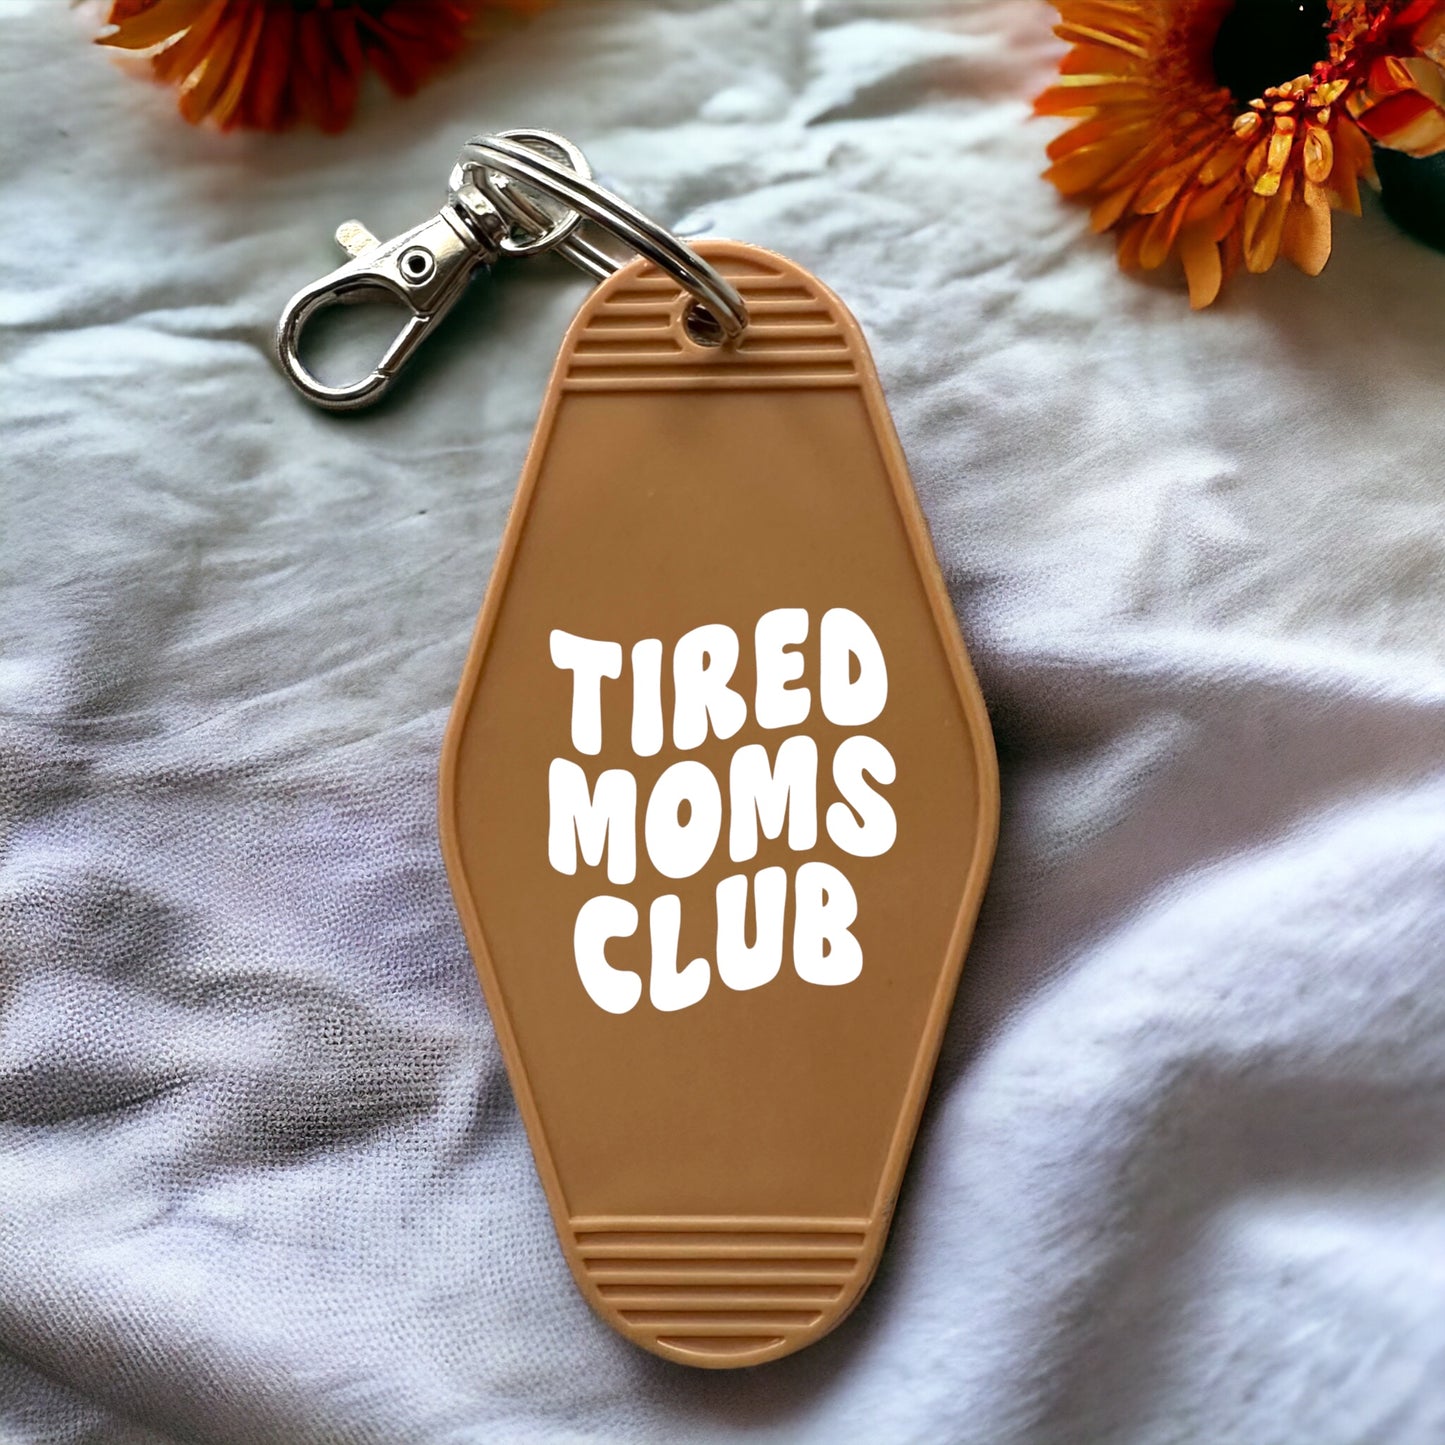 TIRED MOMS CLUB Keychain